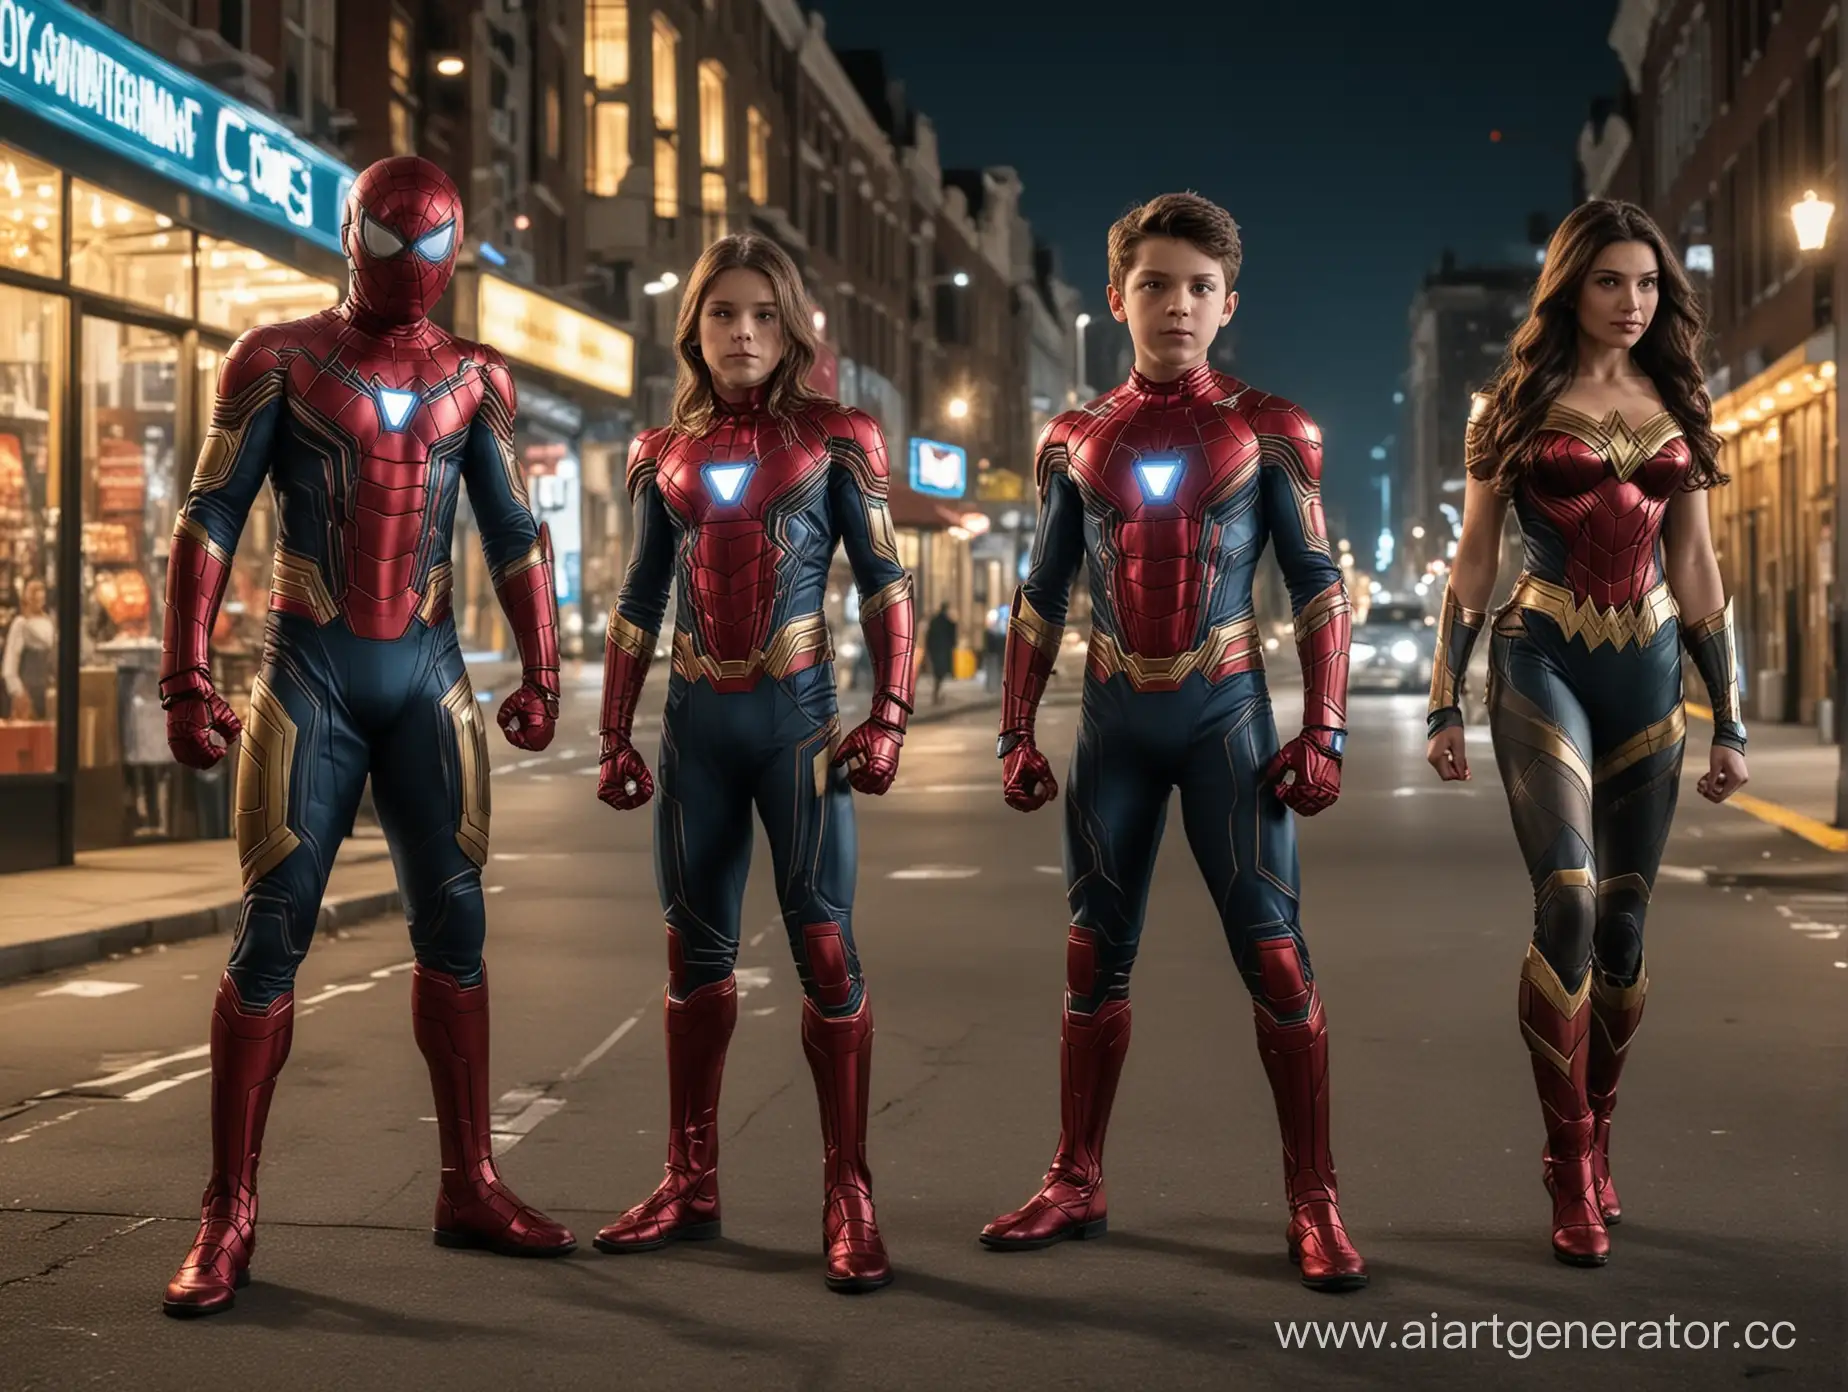 Kids-in-Superhero-Costumes-Explore-Night-City